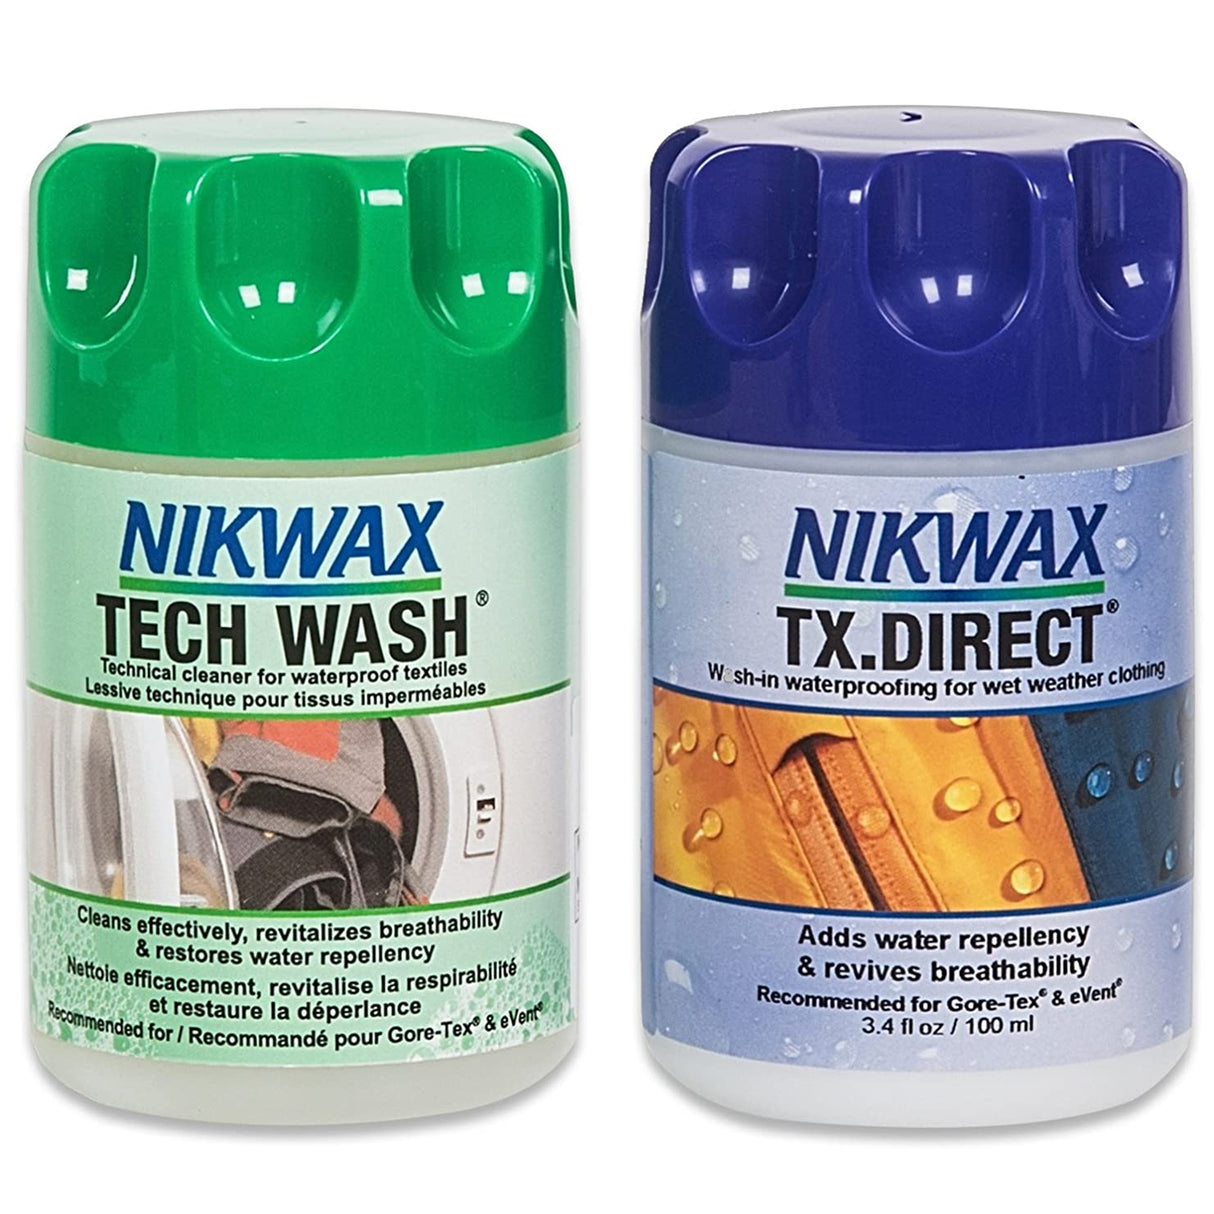 Mini Twin Tech Wash/TX Direct